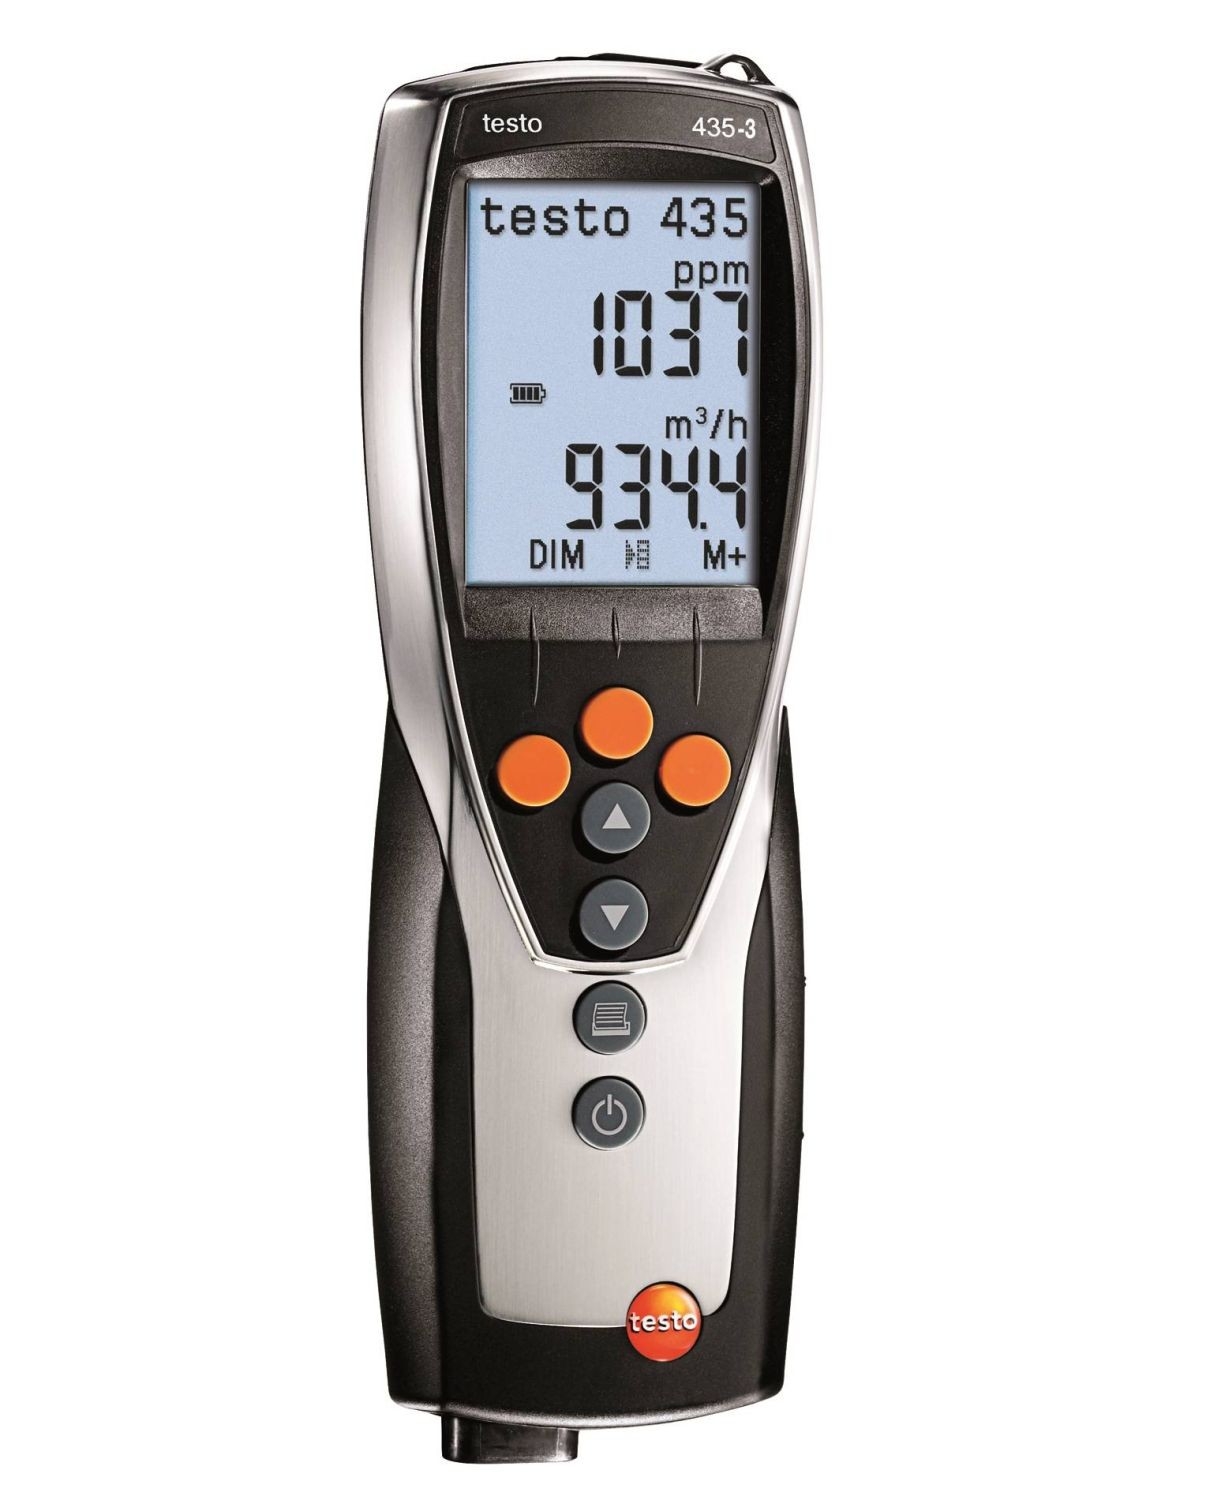 testo 435-4 multifunction indoor air quality meter